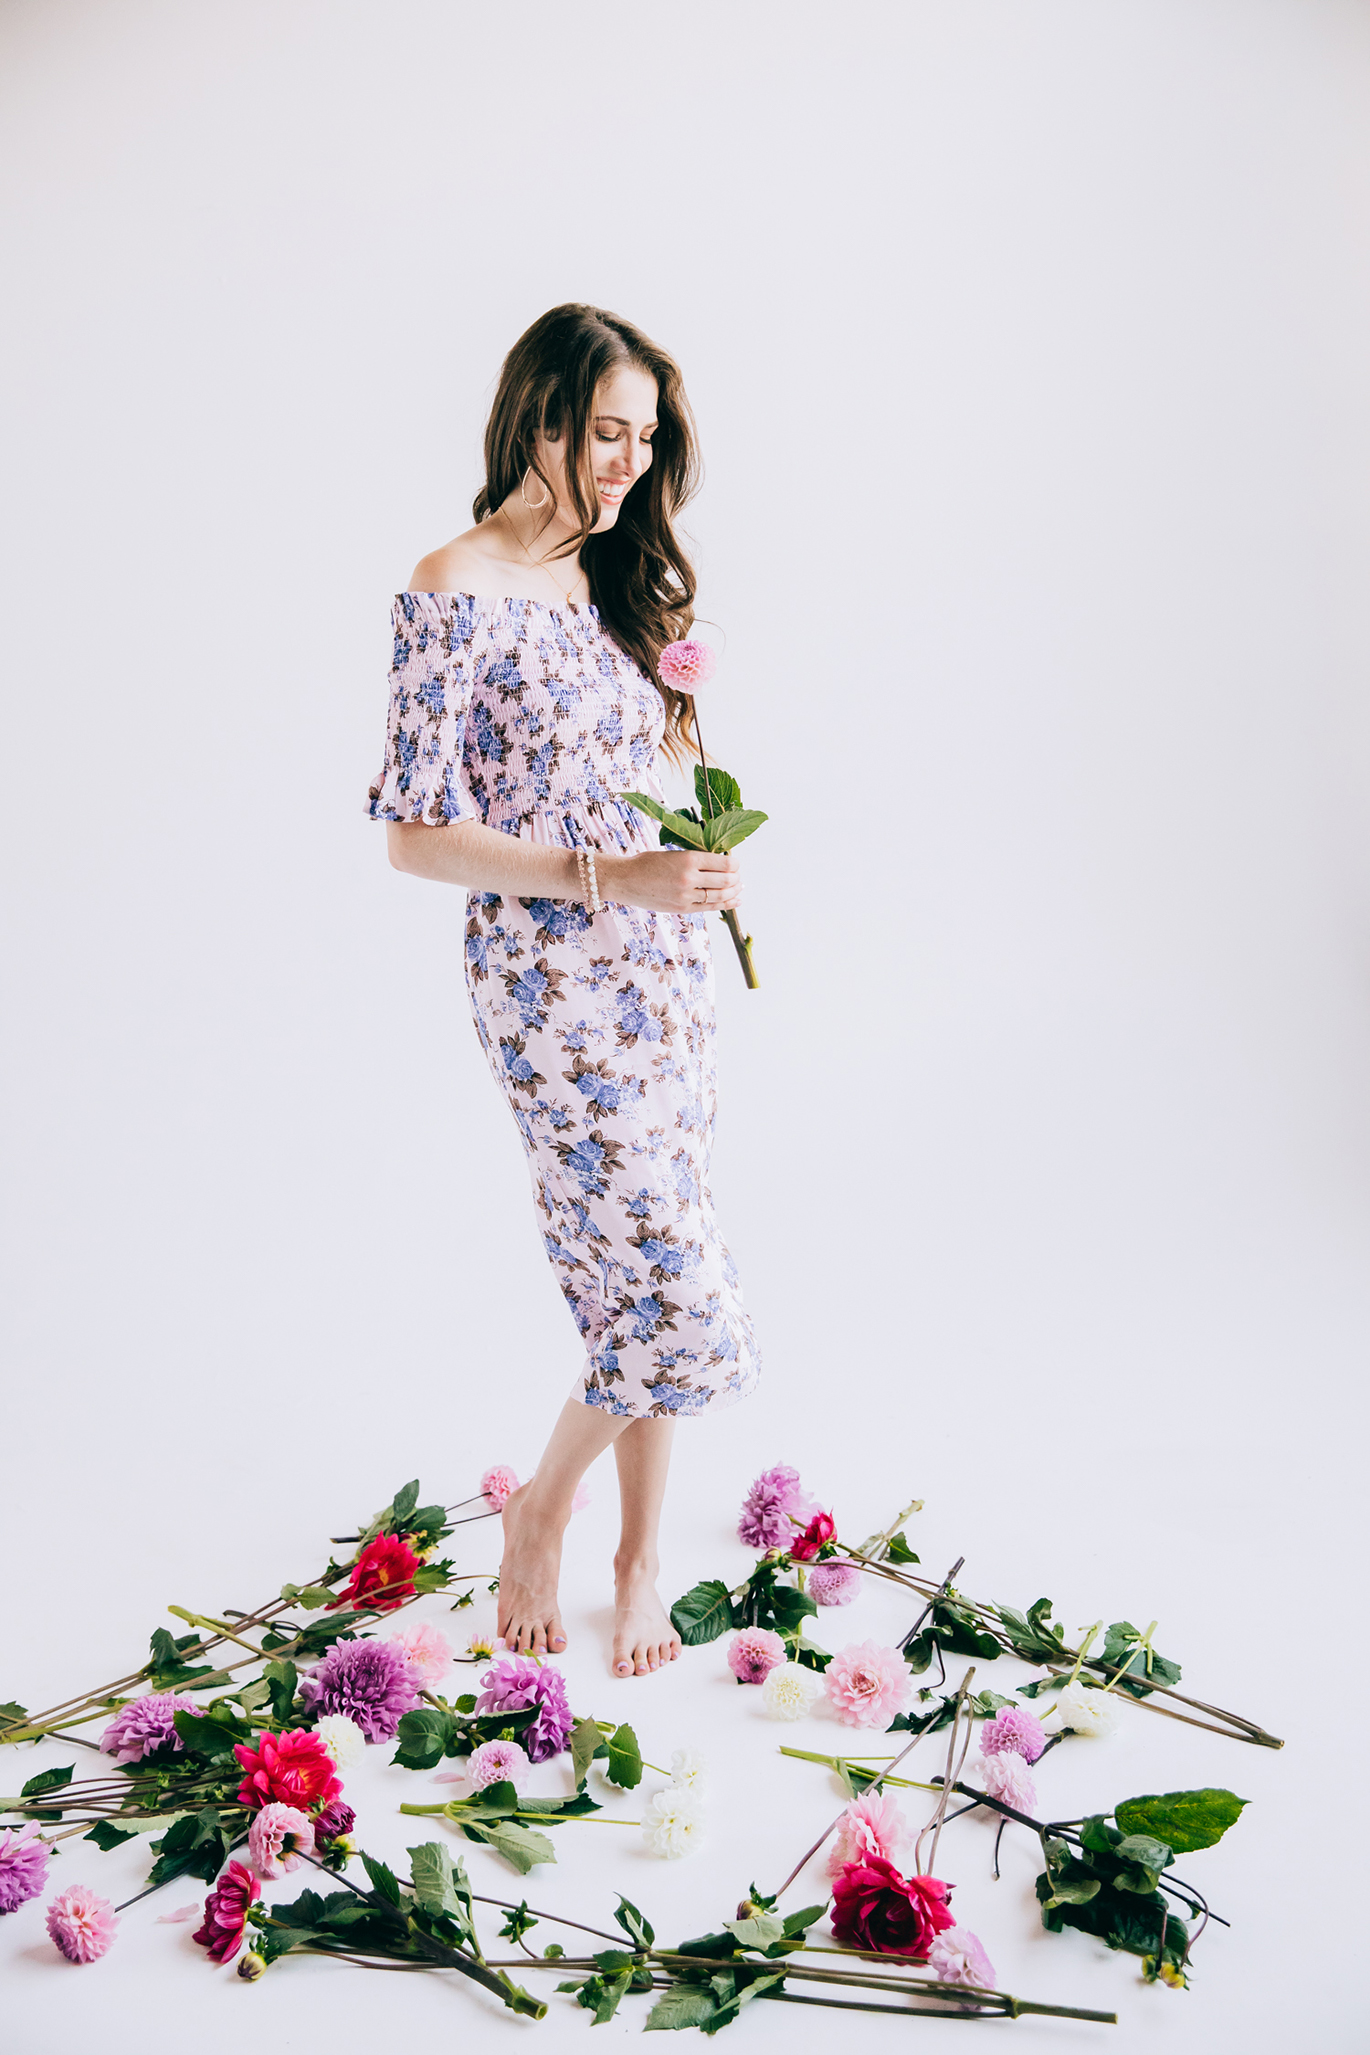 Topshop floral dress